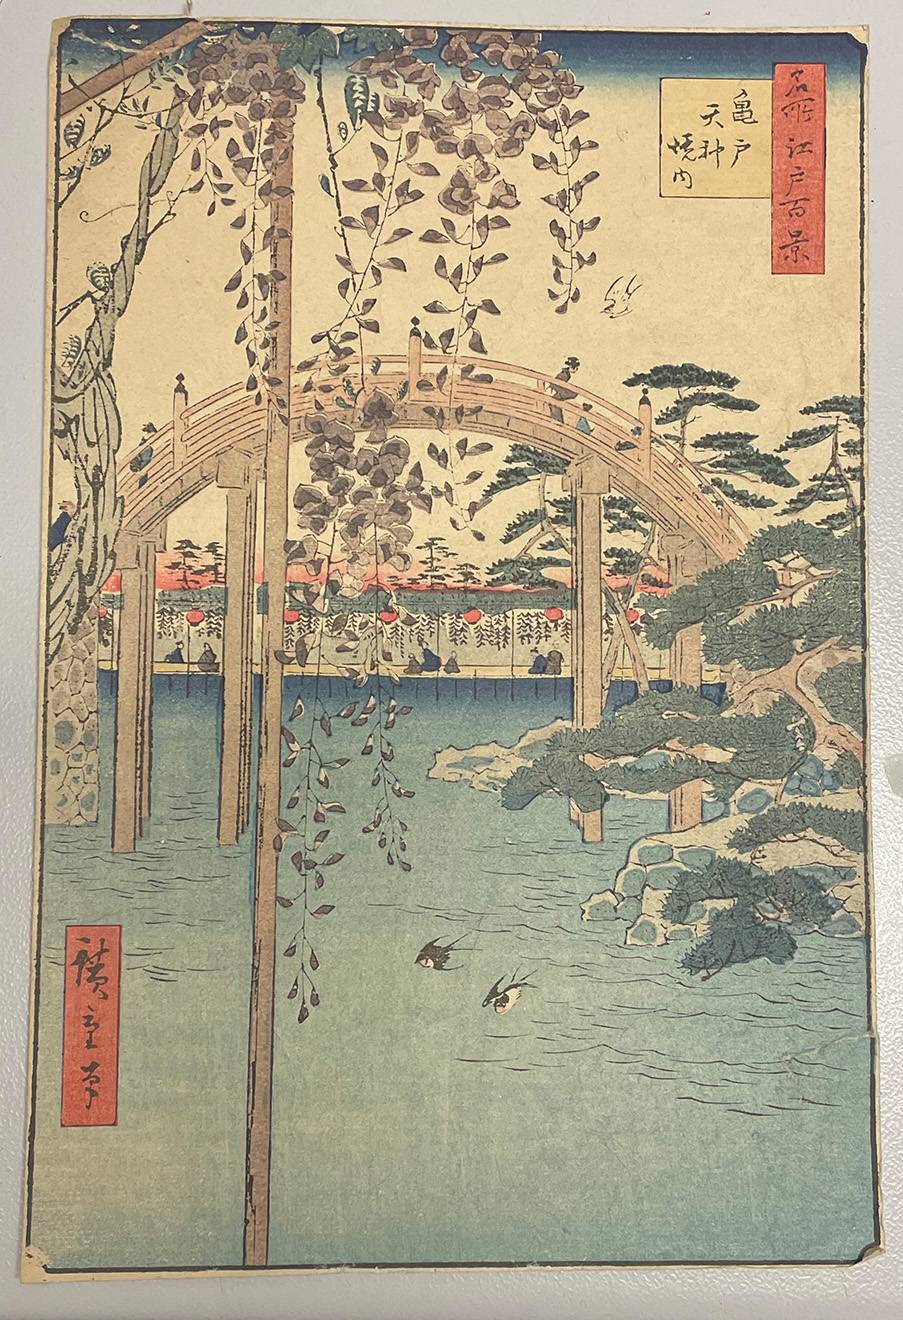 Ando Hiroshige (1797-1858). The Bridge with Wisteria or Kameido Tenjin Keidai Kameido Tenji